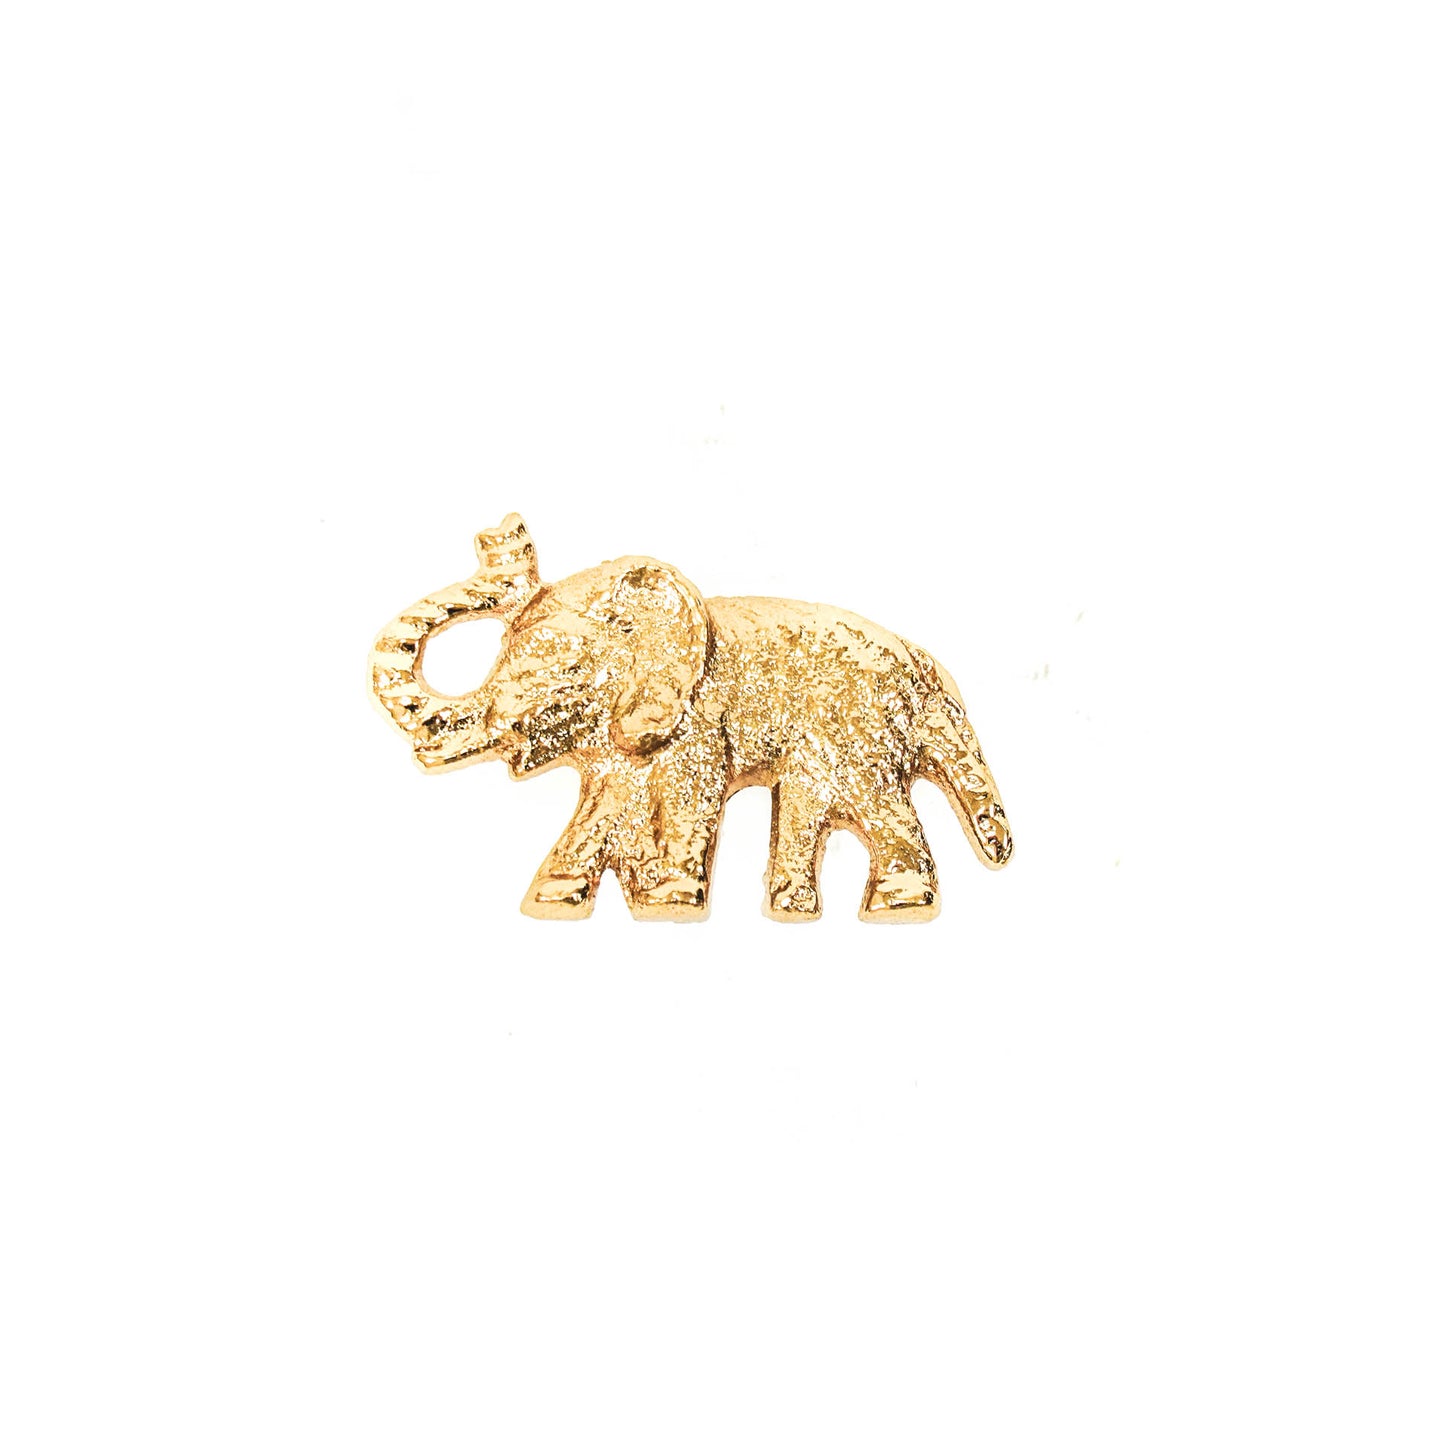 HV Elephant Candle Pins - Gold - Set of 2 - 7x4x1 cm